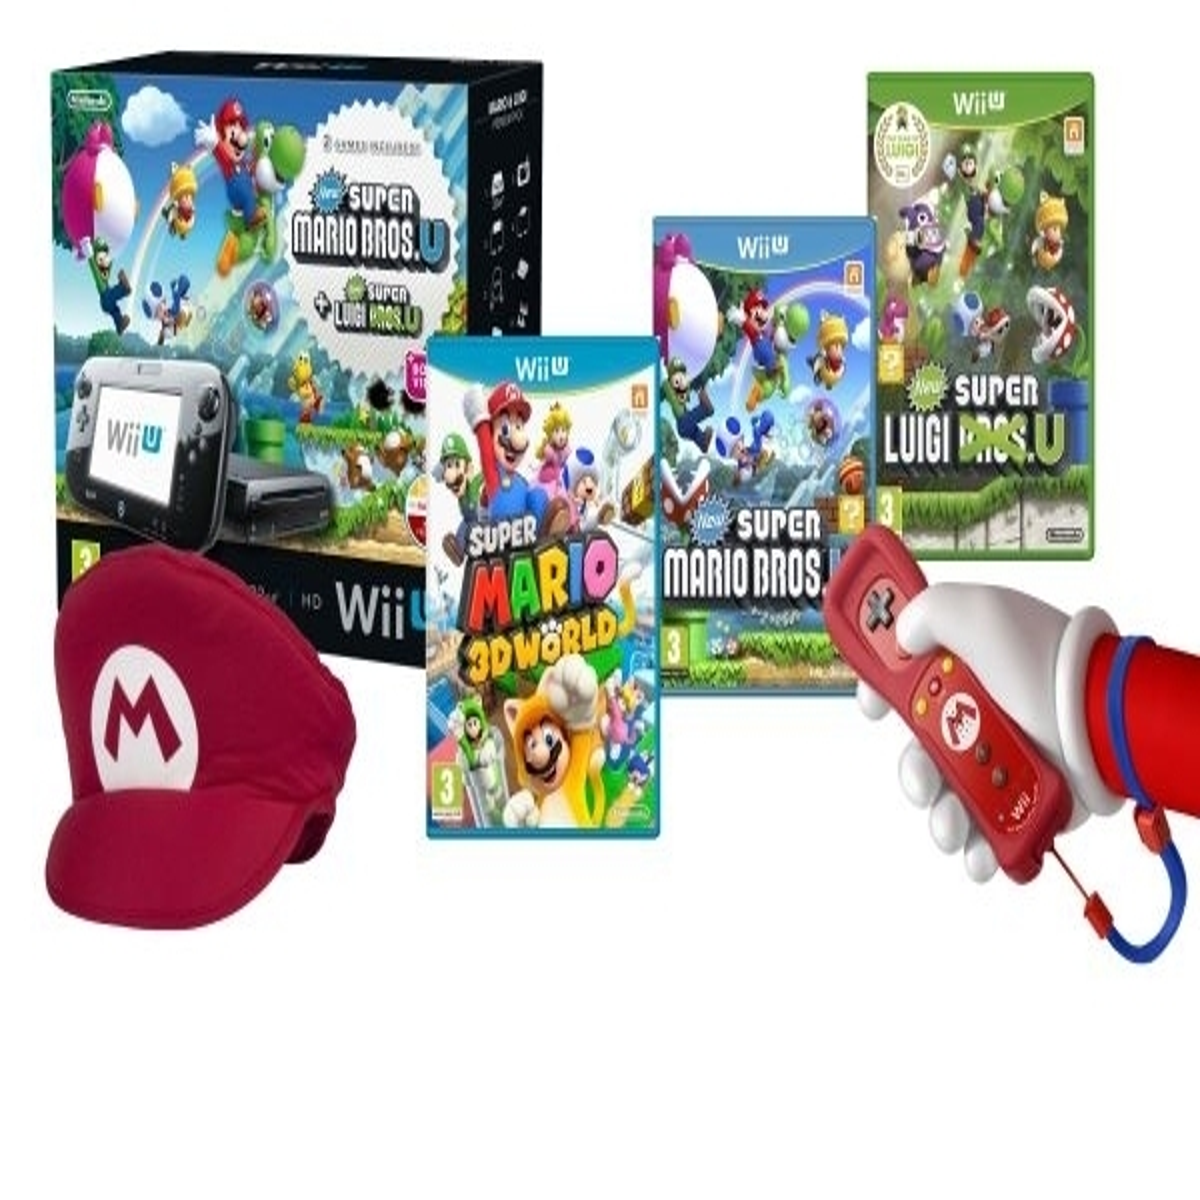 Super Mario 3d World - Nintendo Wii U